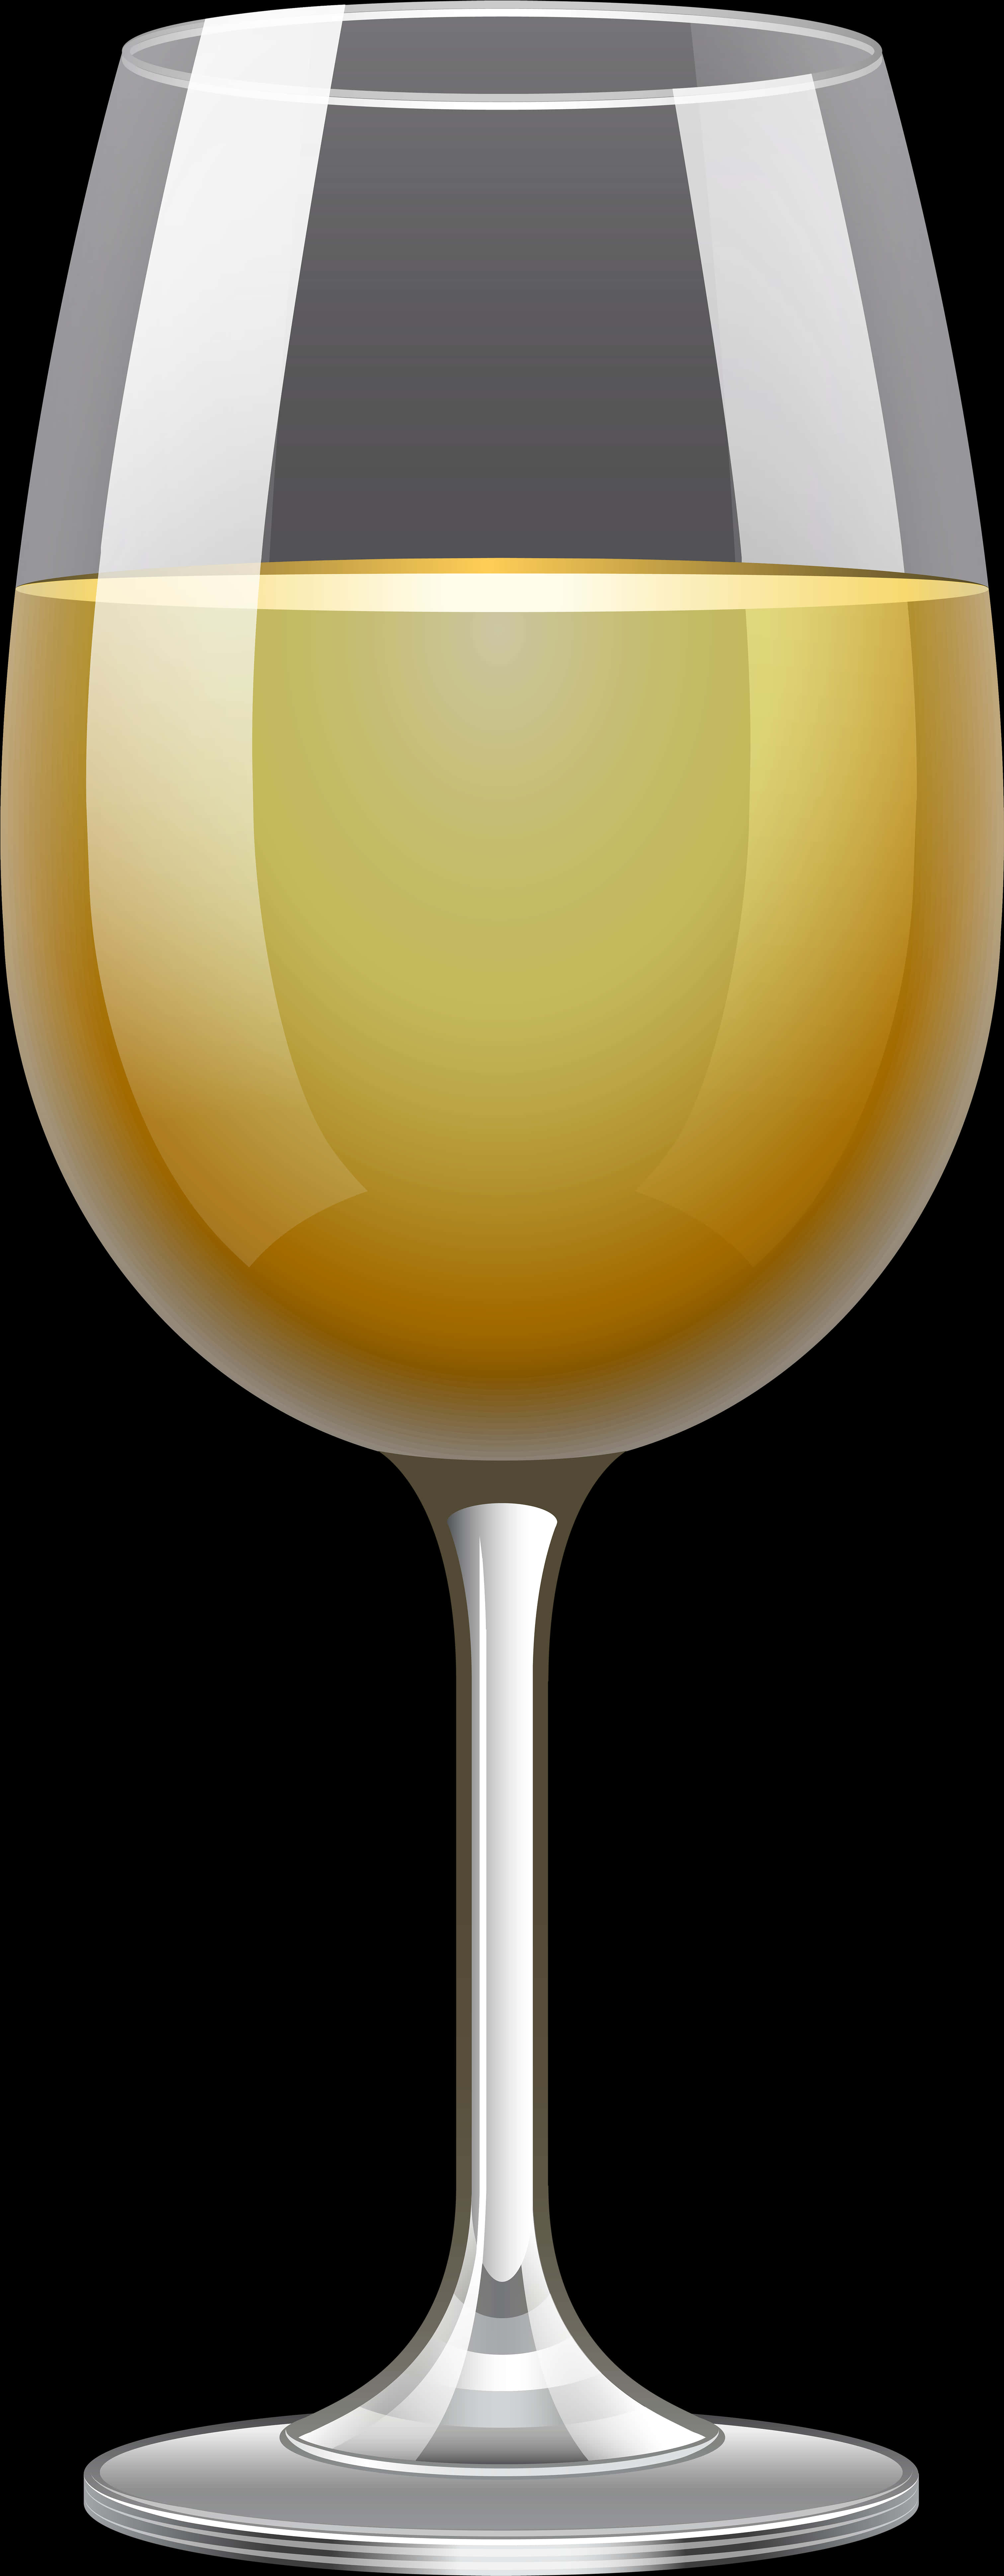 White Wine Glass Vector Illustration.jpg PNG image